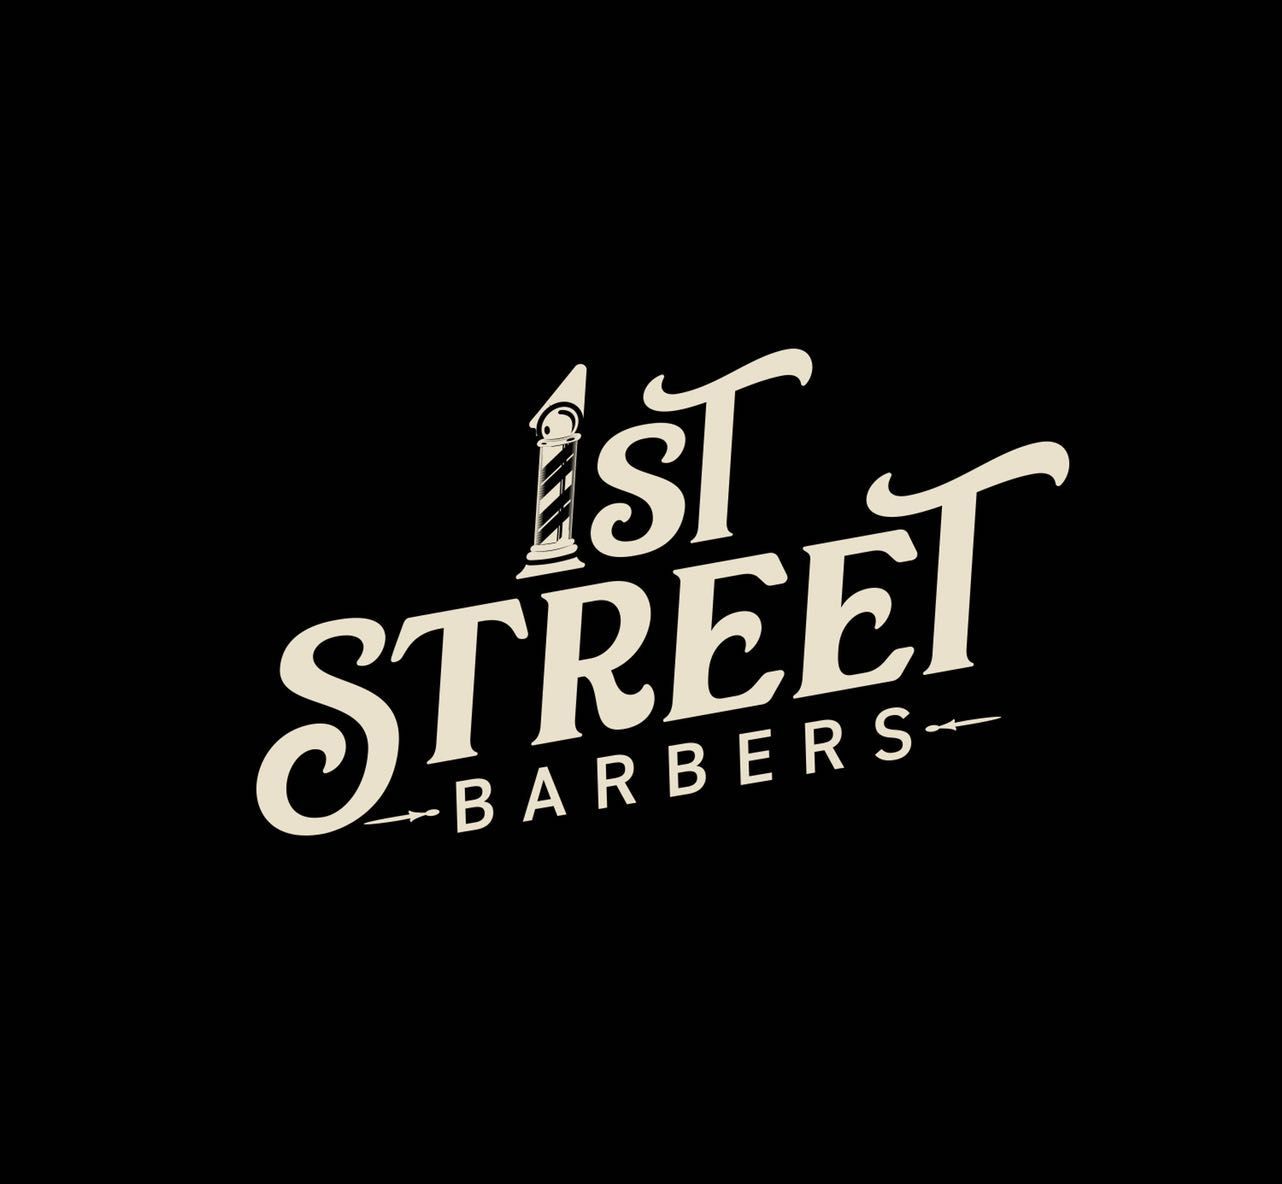 1st Street Barbers, 1433 1st St, Escalon, 95320